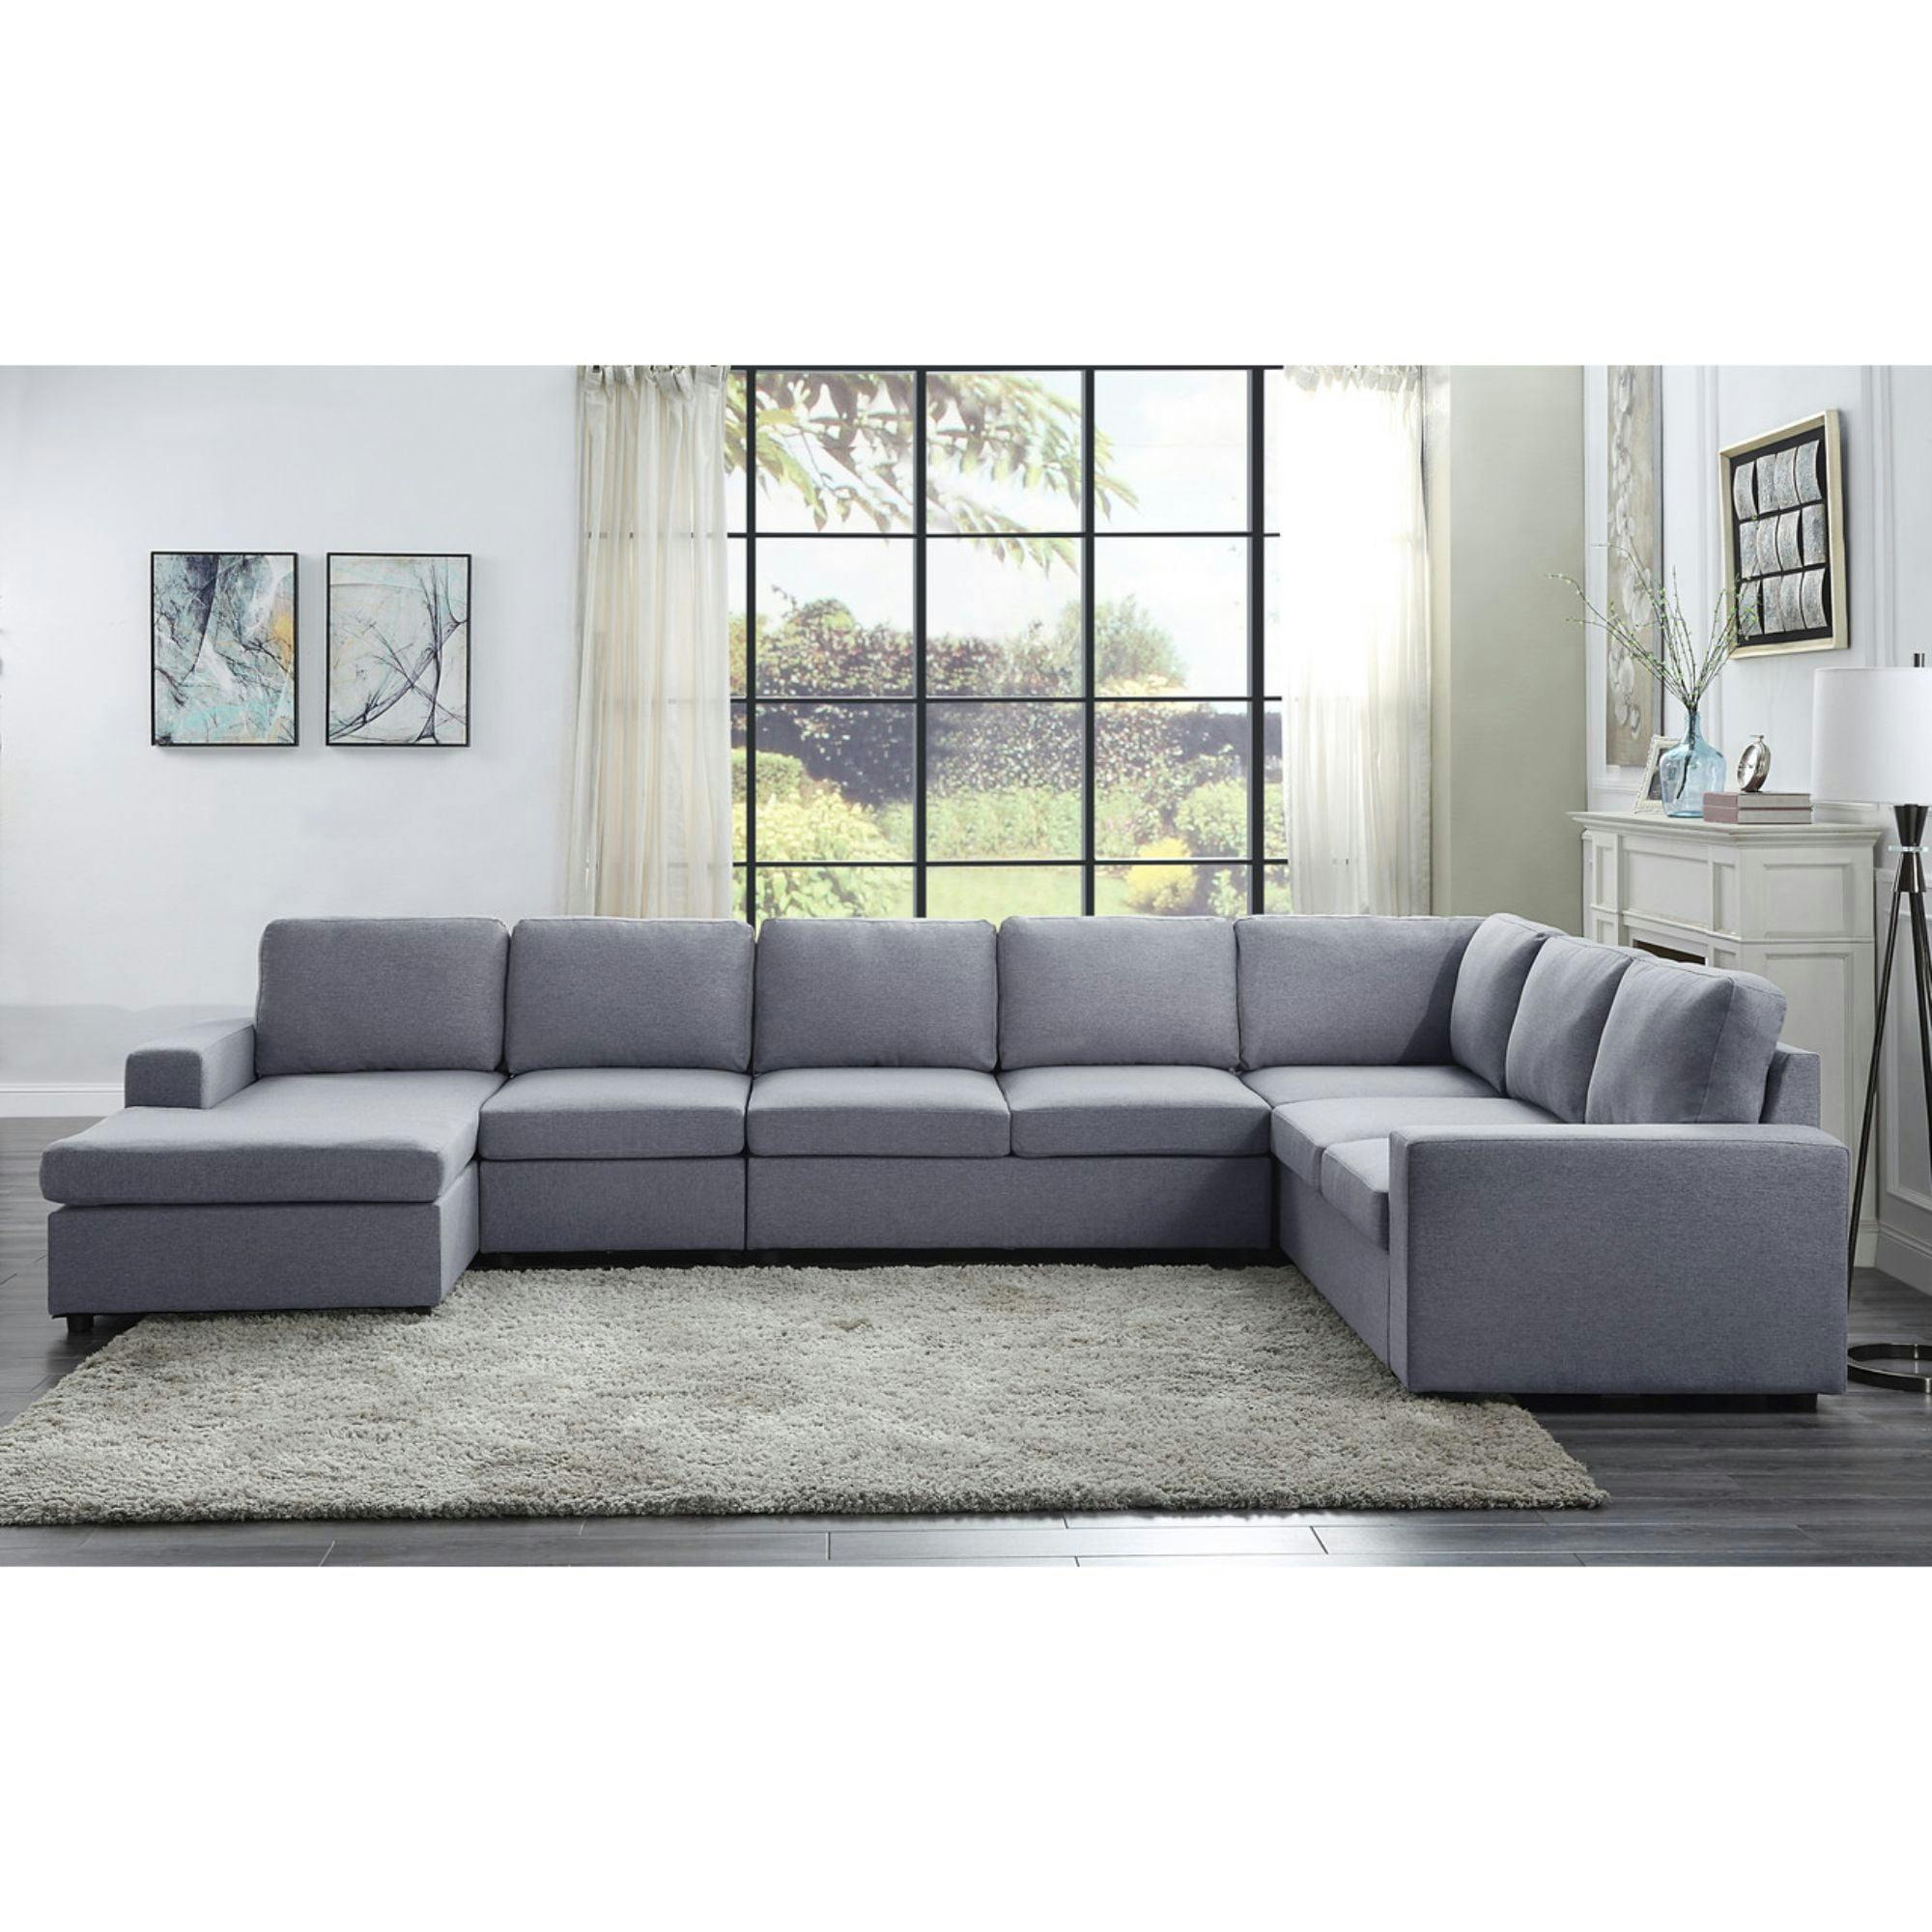 Chicago Bears Inspired Light Gray Modular Sectional Sofa Set, 7-Piece